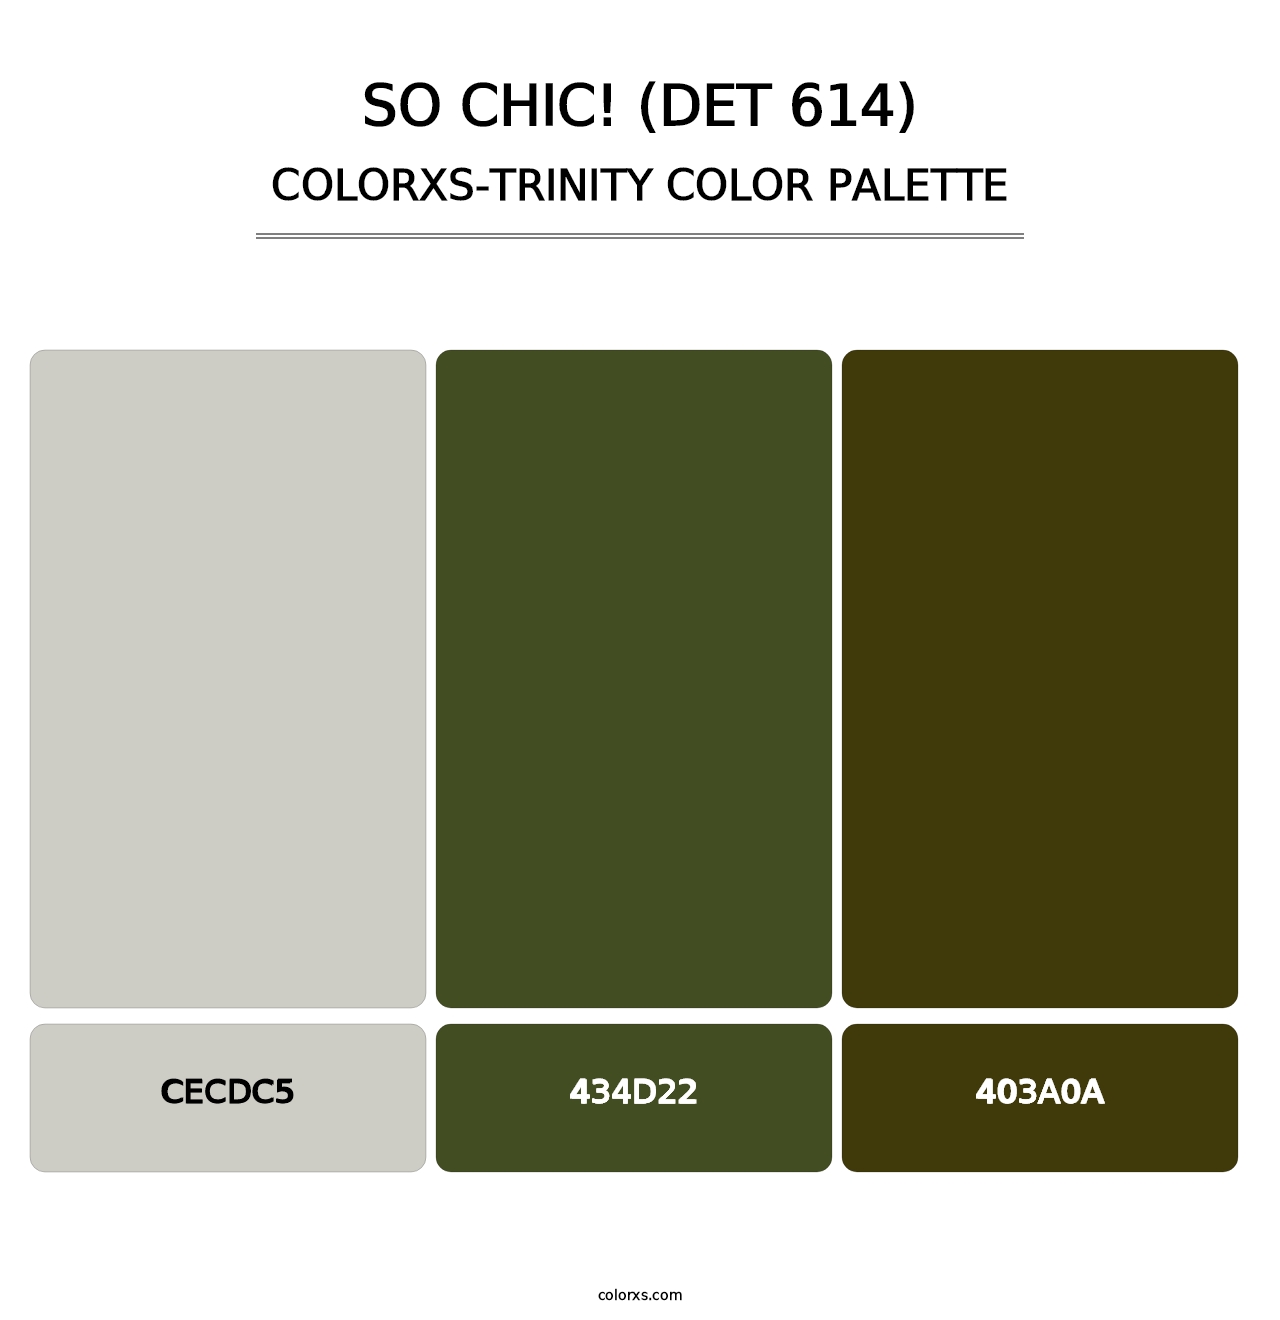 So Chic! (DET 614) - Colorxs Trinity Palette